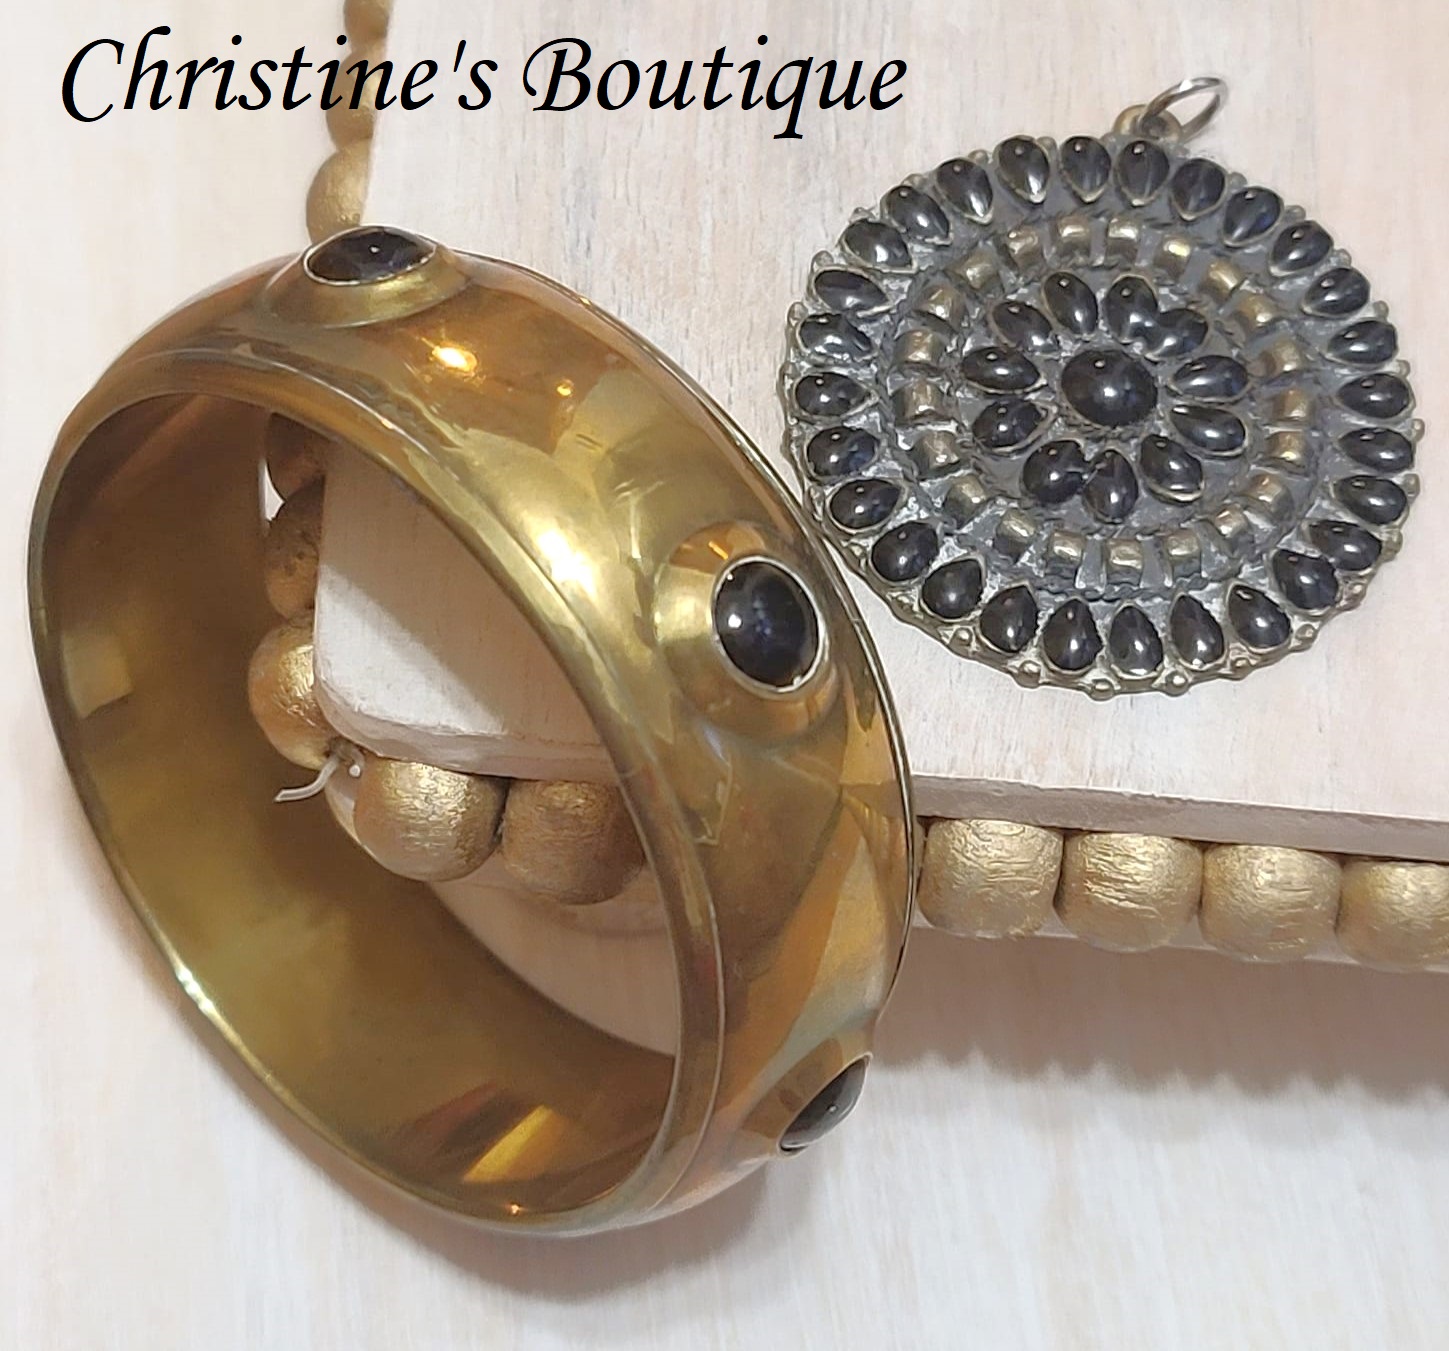 Brass bangle bracelet with black cabachons and matching pendant, vintage set